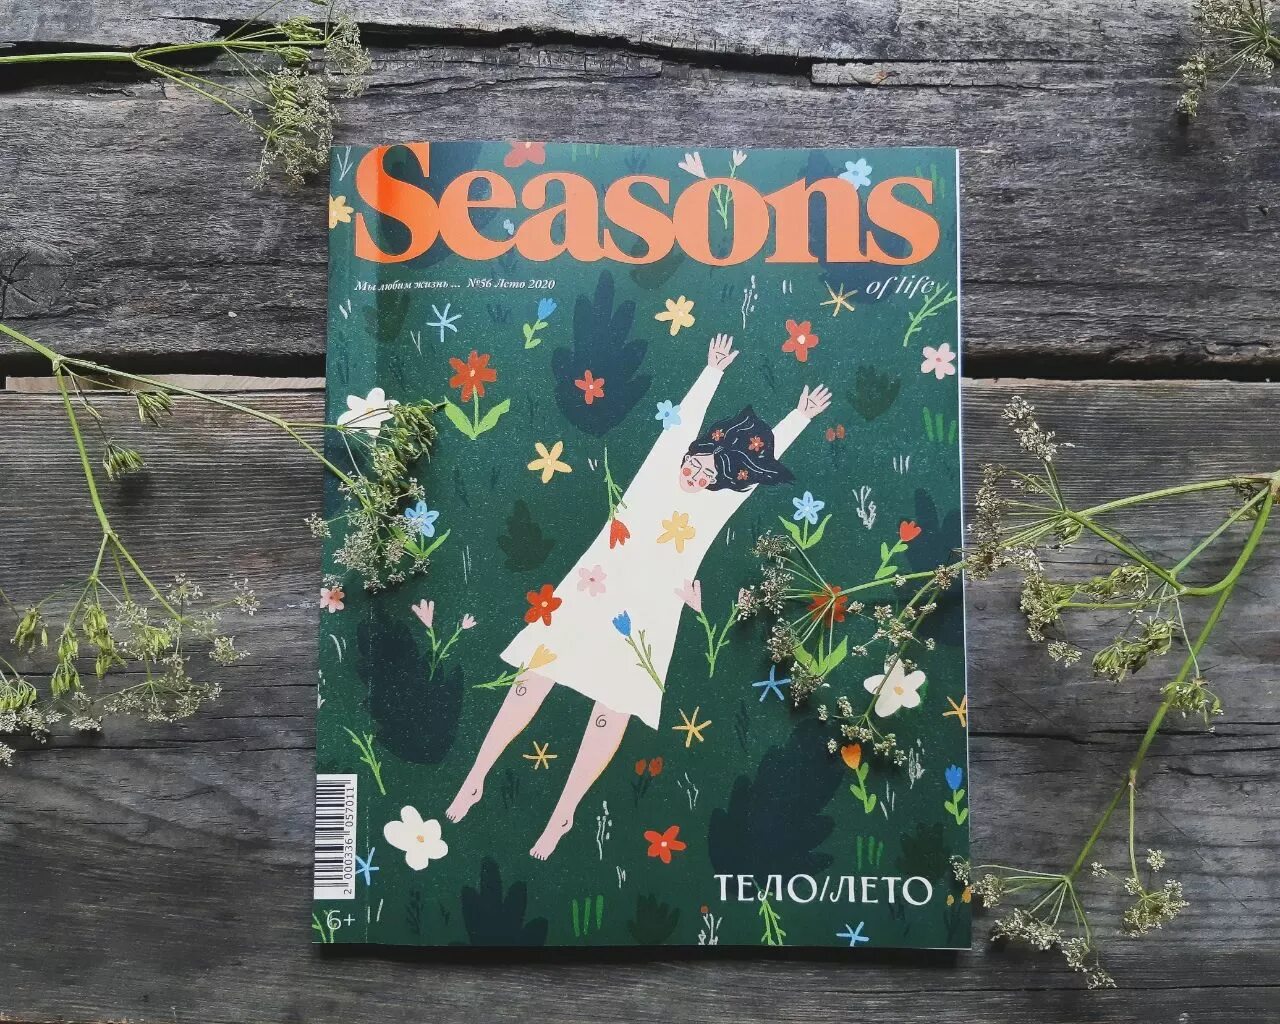 Seasons of Life журнал. Журнал Сизонс обложки. Seasons шурнала. Обложка журнала лето.